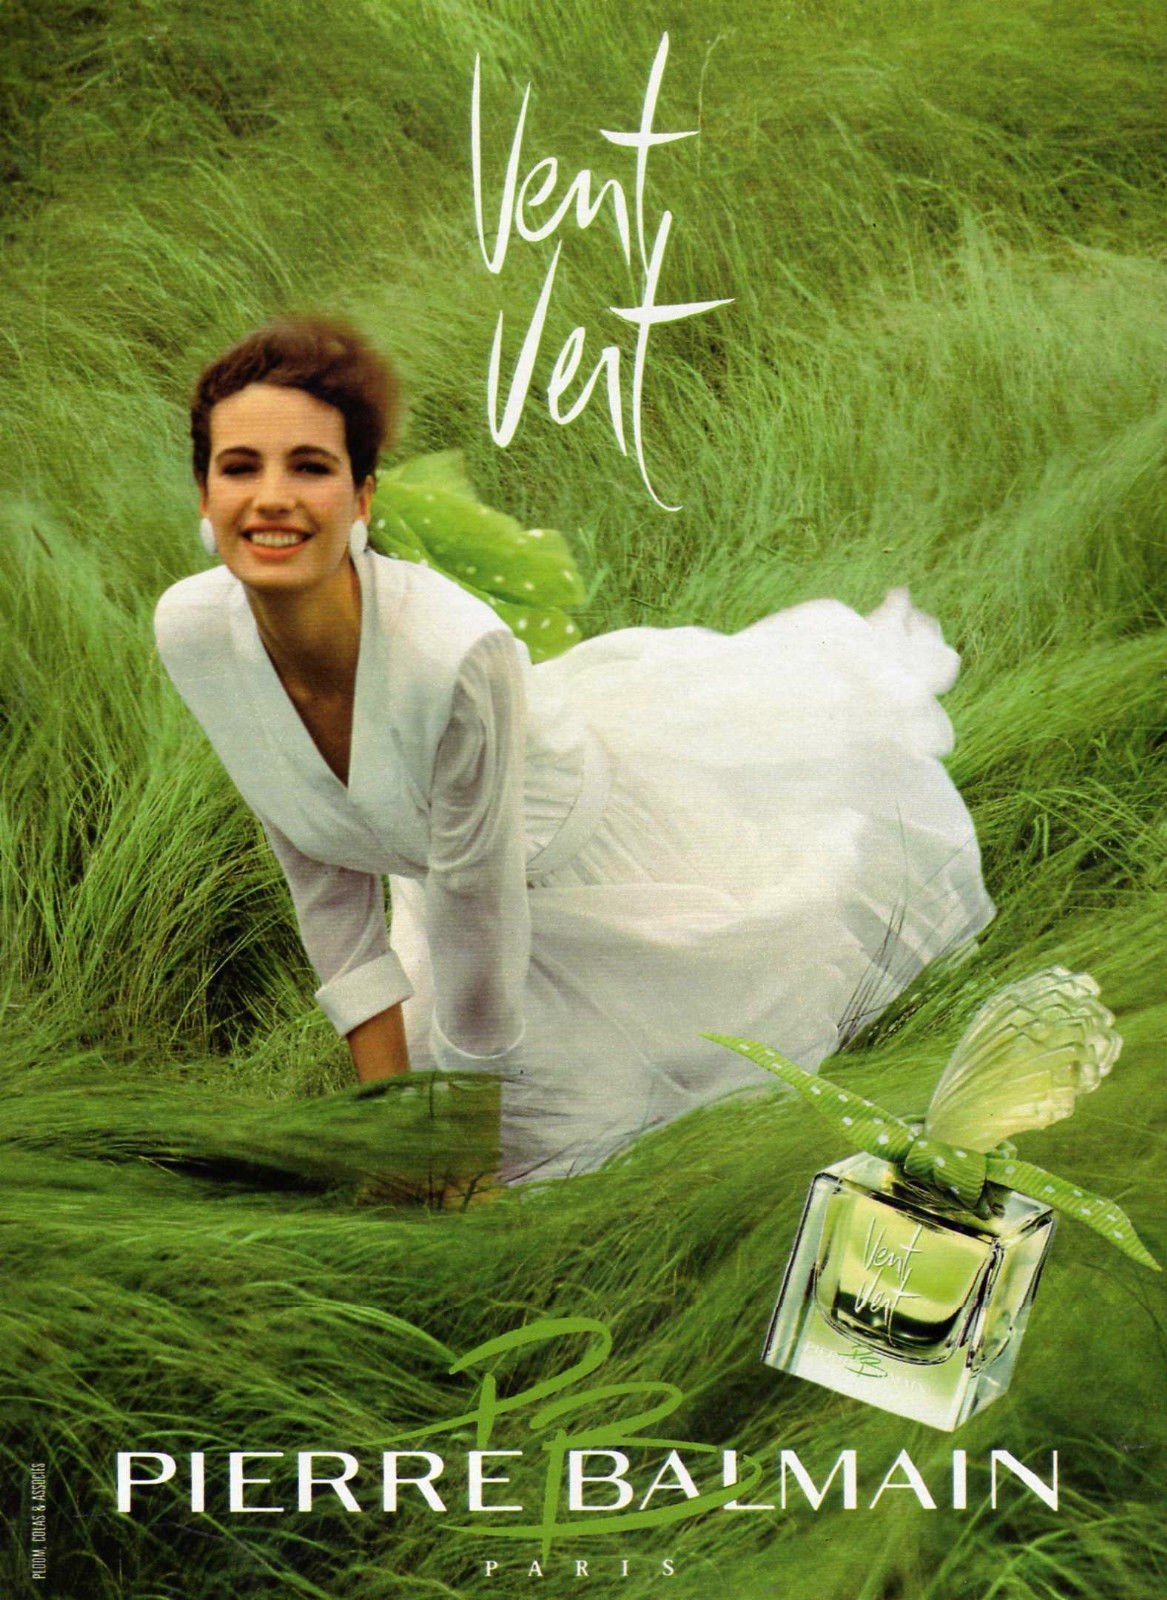 Vent Vert 1947 Eau de Balmain » Reviews & Perfume Facts